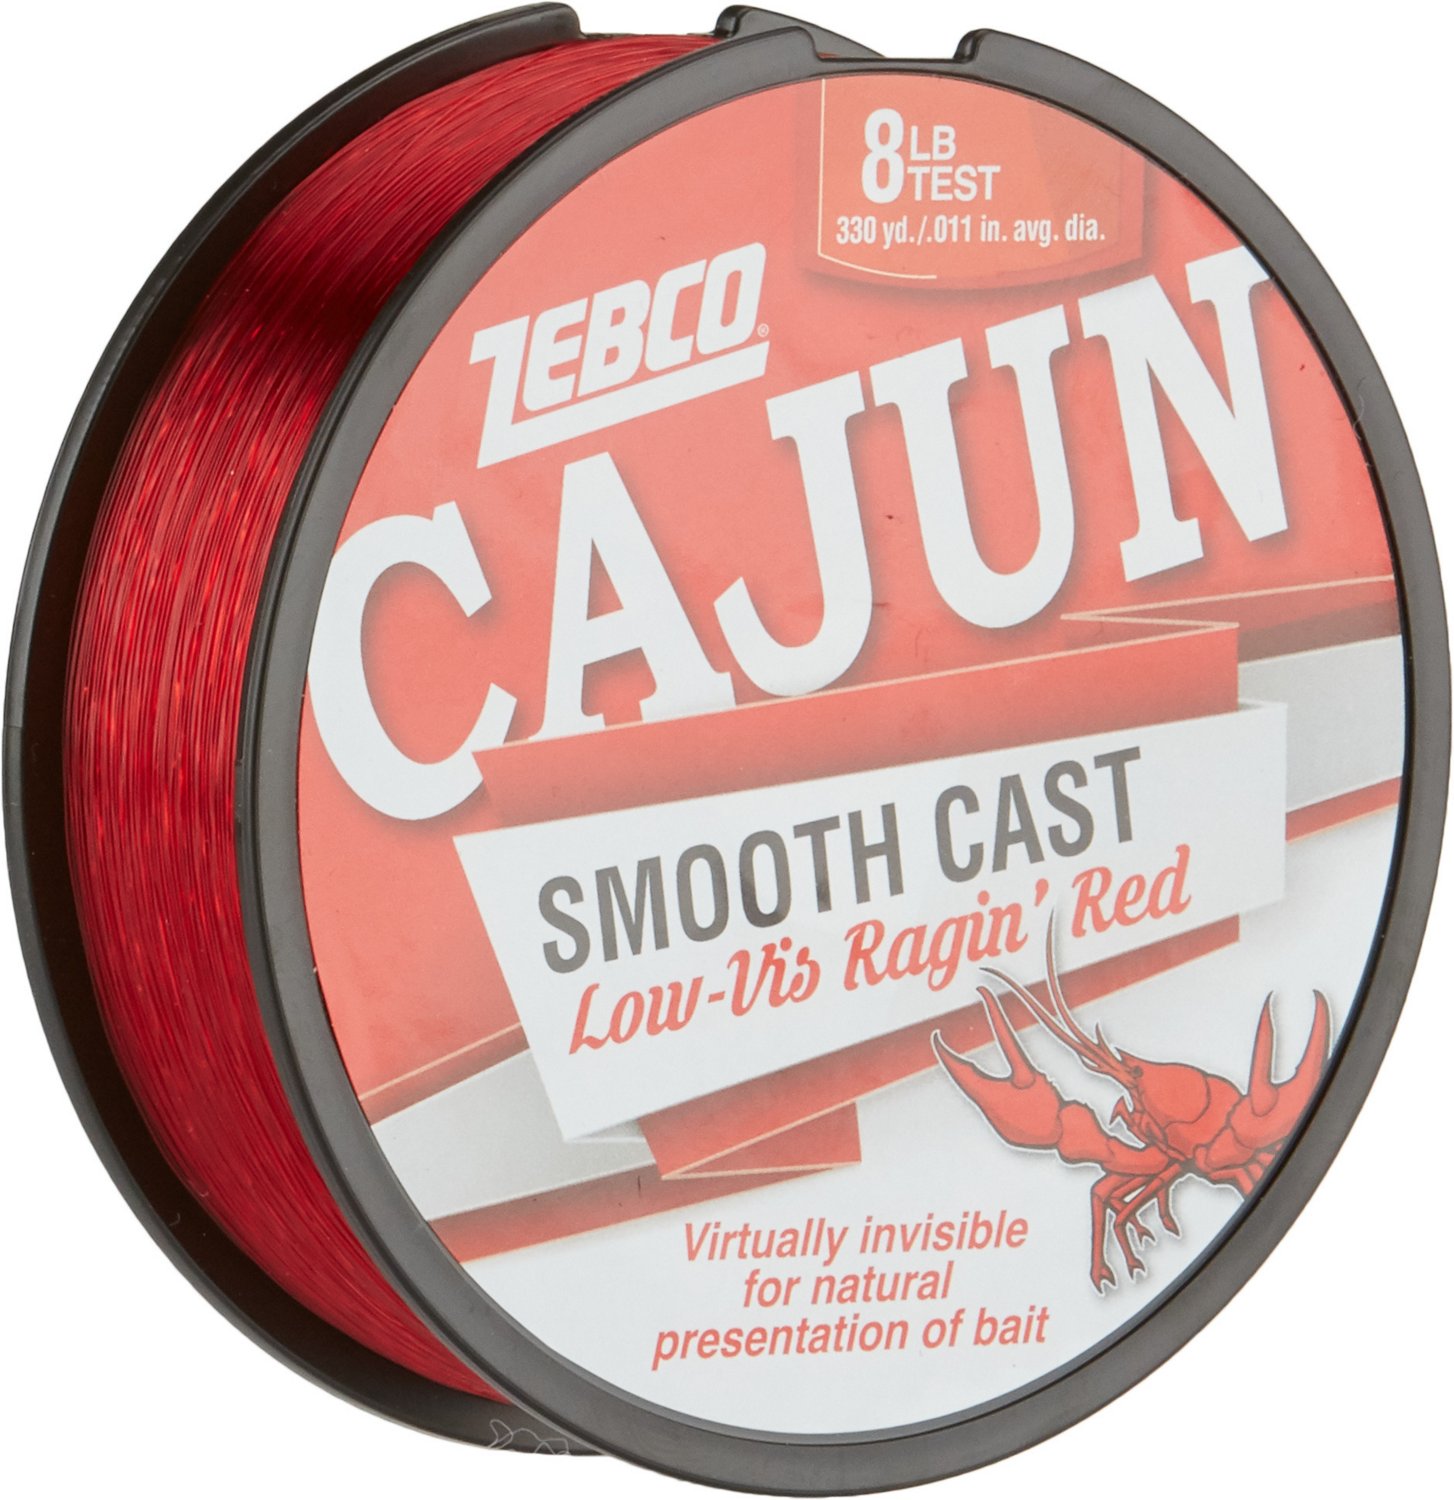 Zebco Cajun Smooth Cast 8 lb test 1600 yards clear blue bayou color NIP 